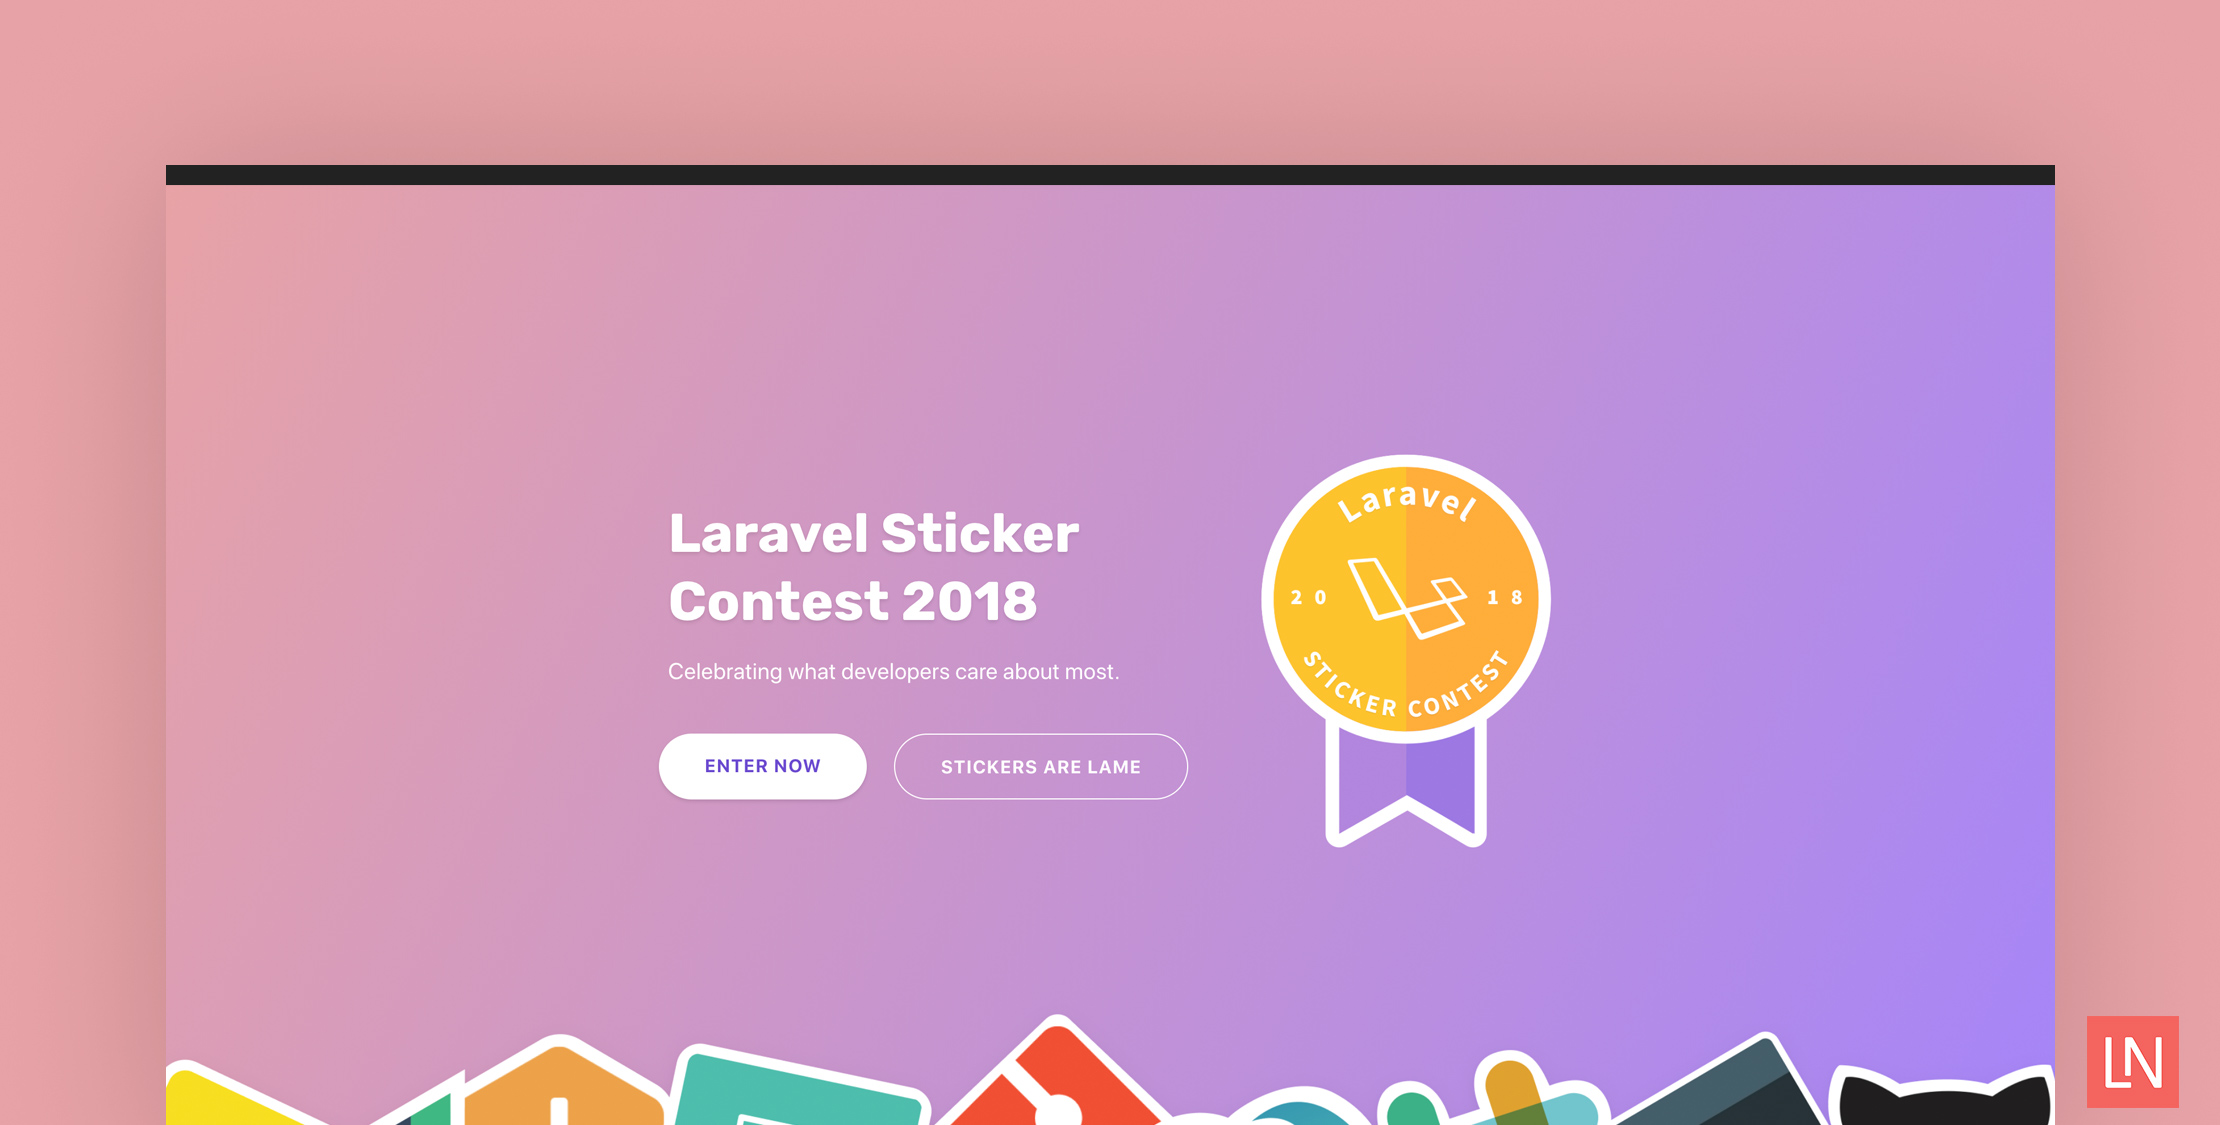 Laravel Sticker Contest 2018 image